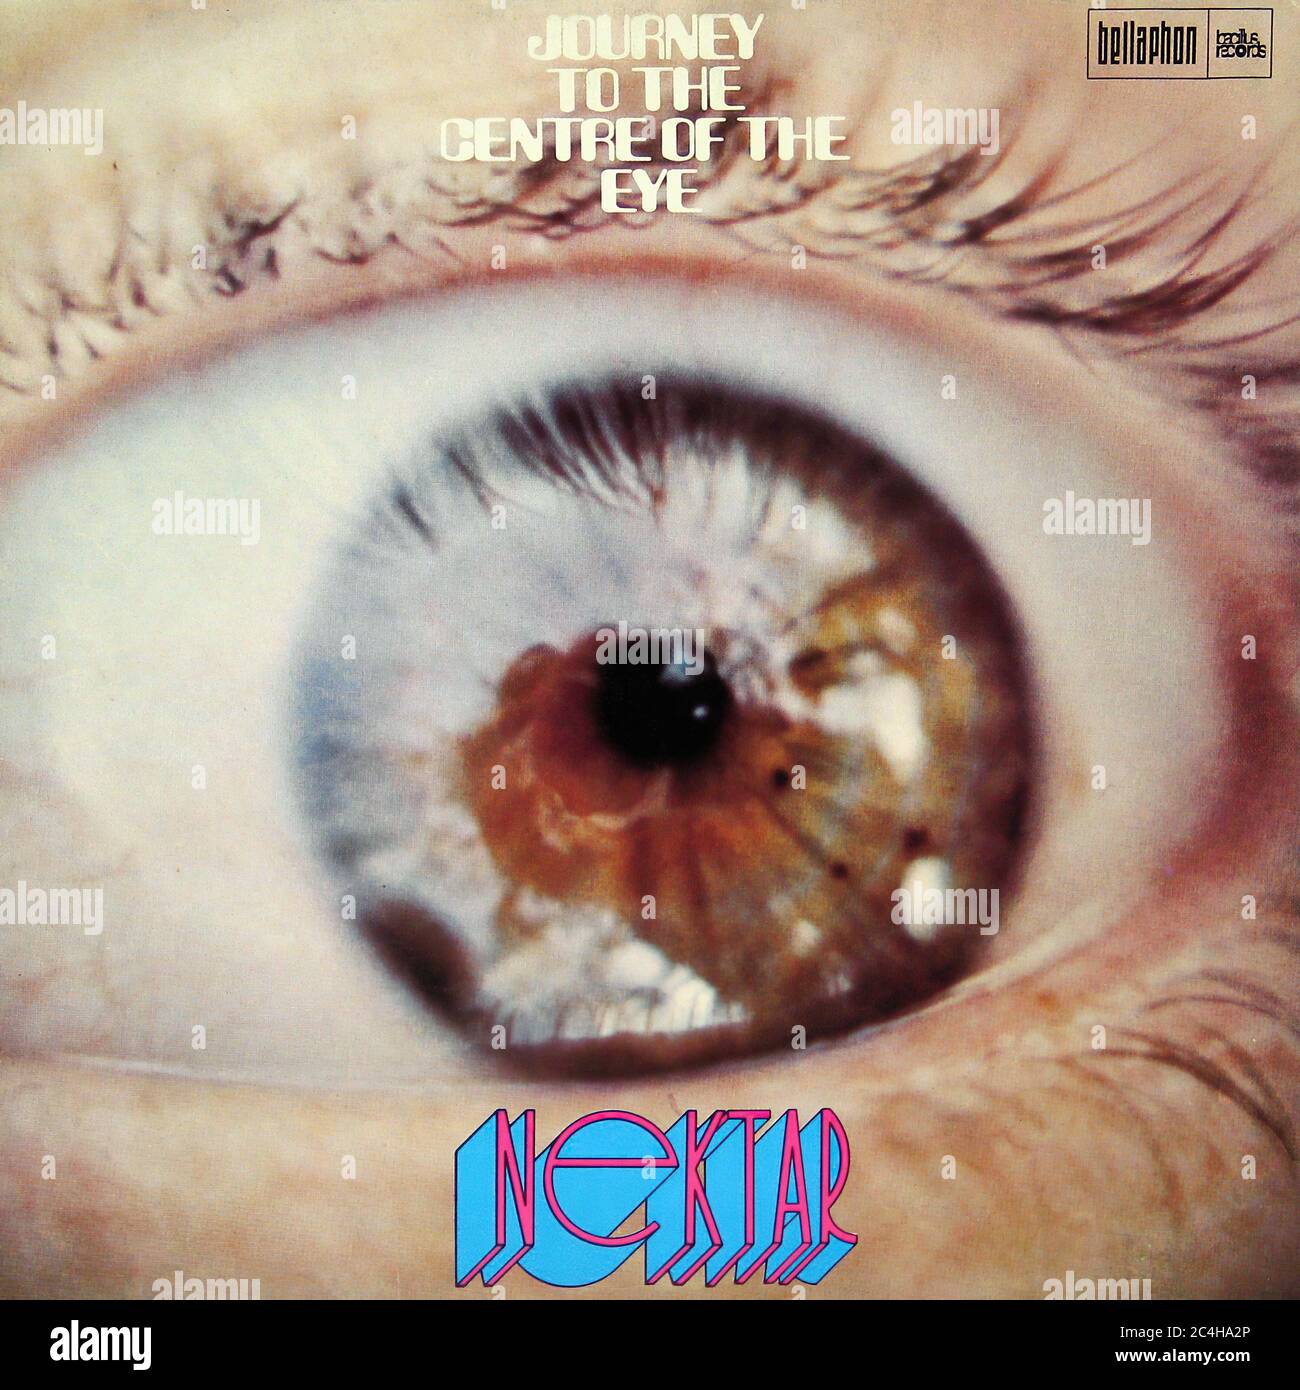 Nektar Journey to the Centre of the Eye 12'' Vinyl Lp - Vintage Record Cover Stock Photo